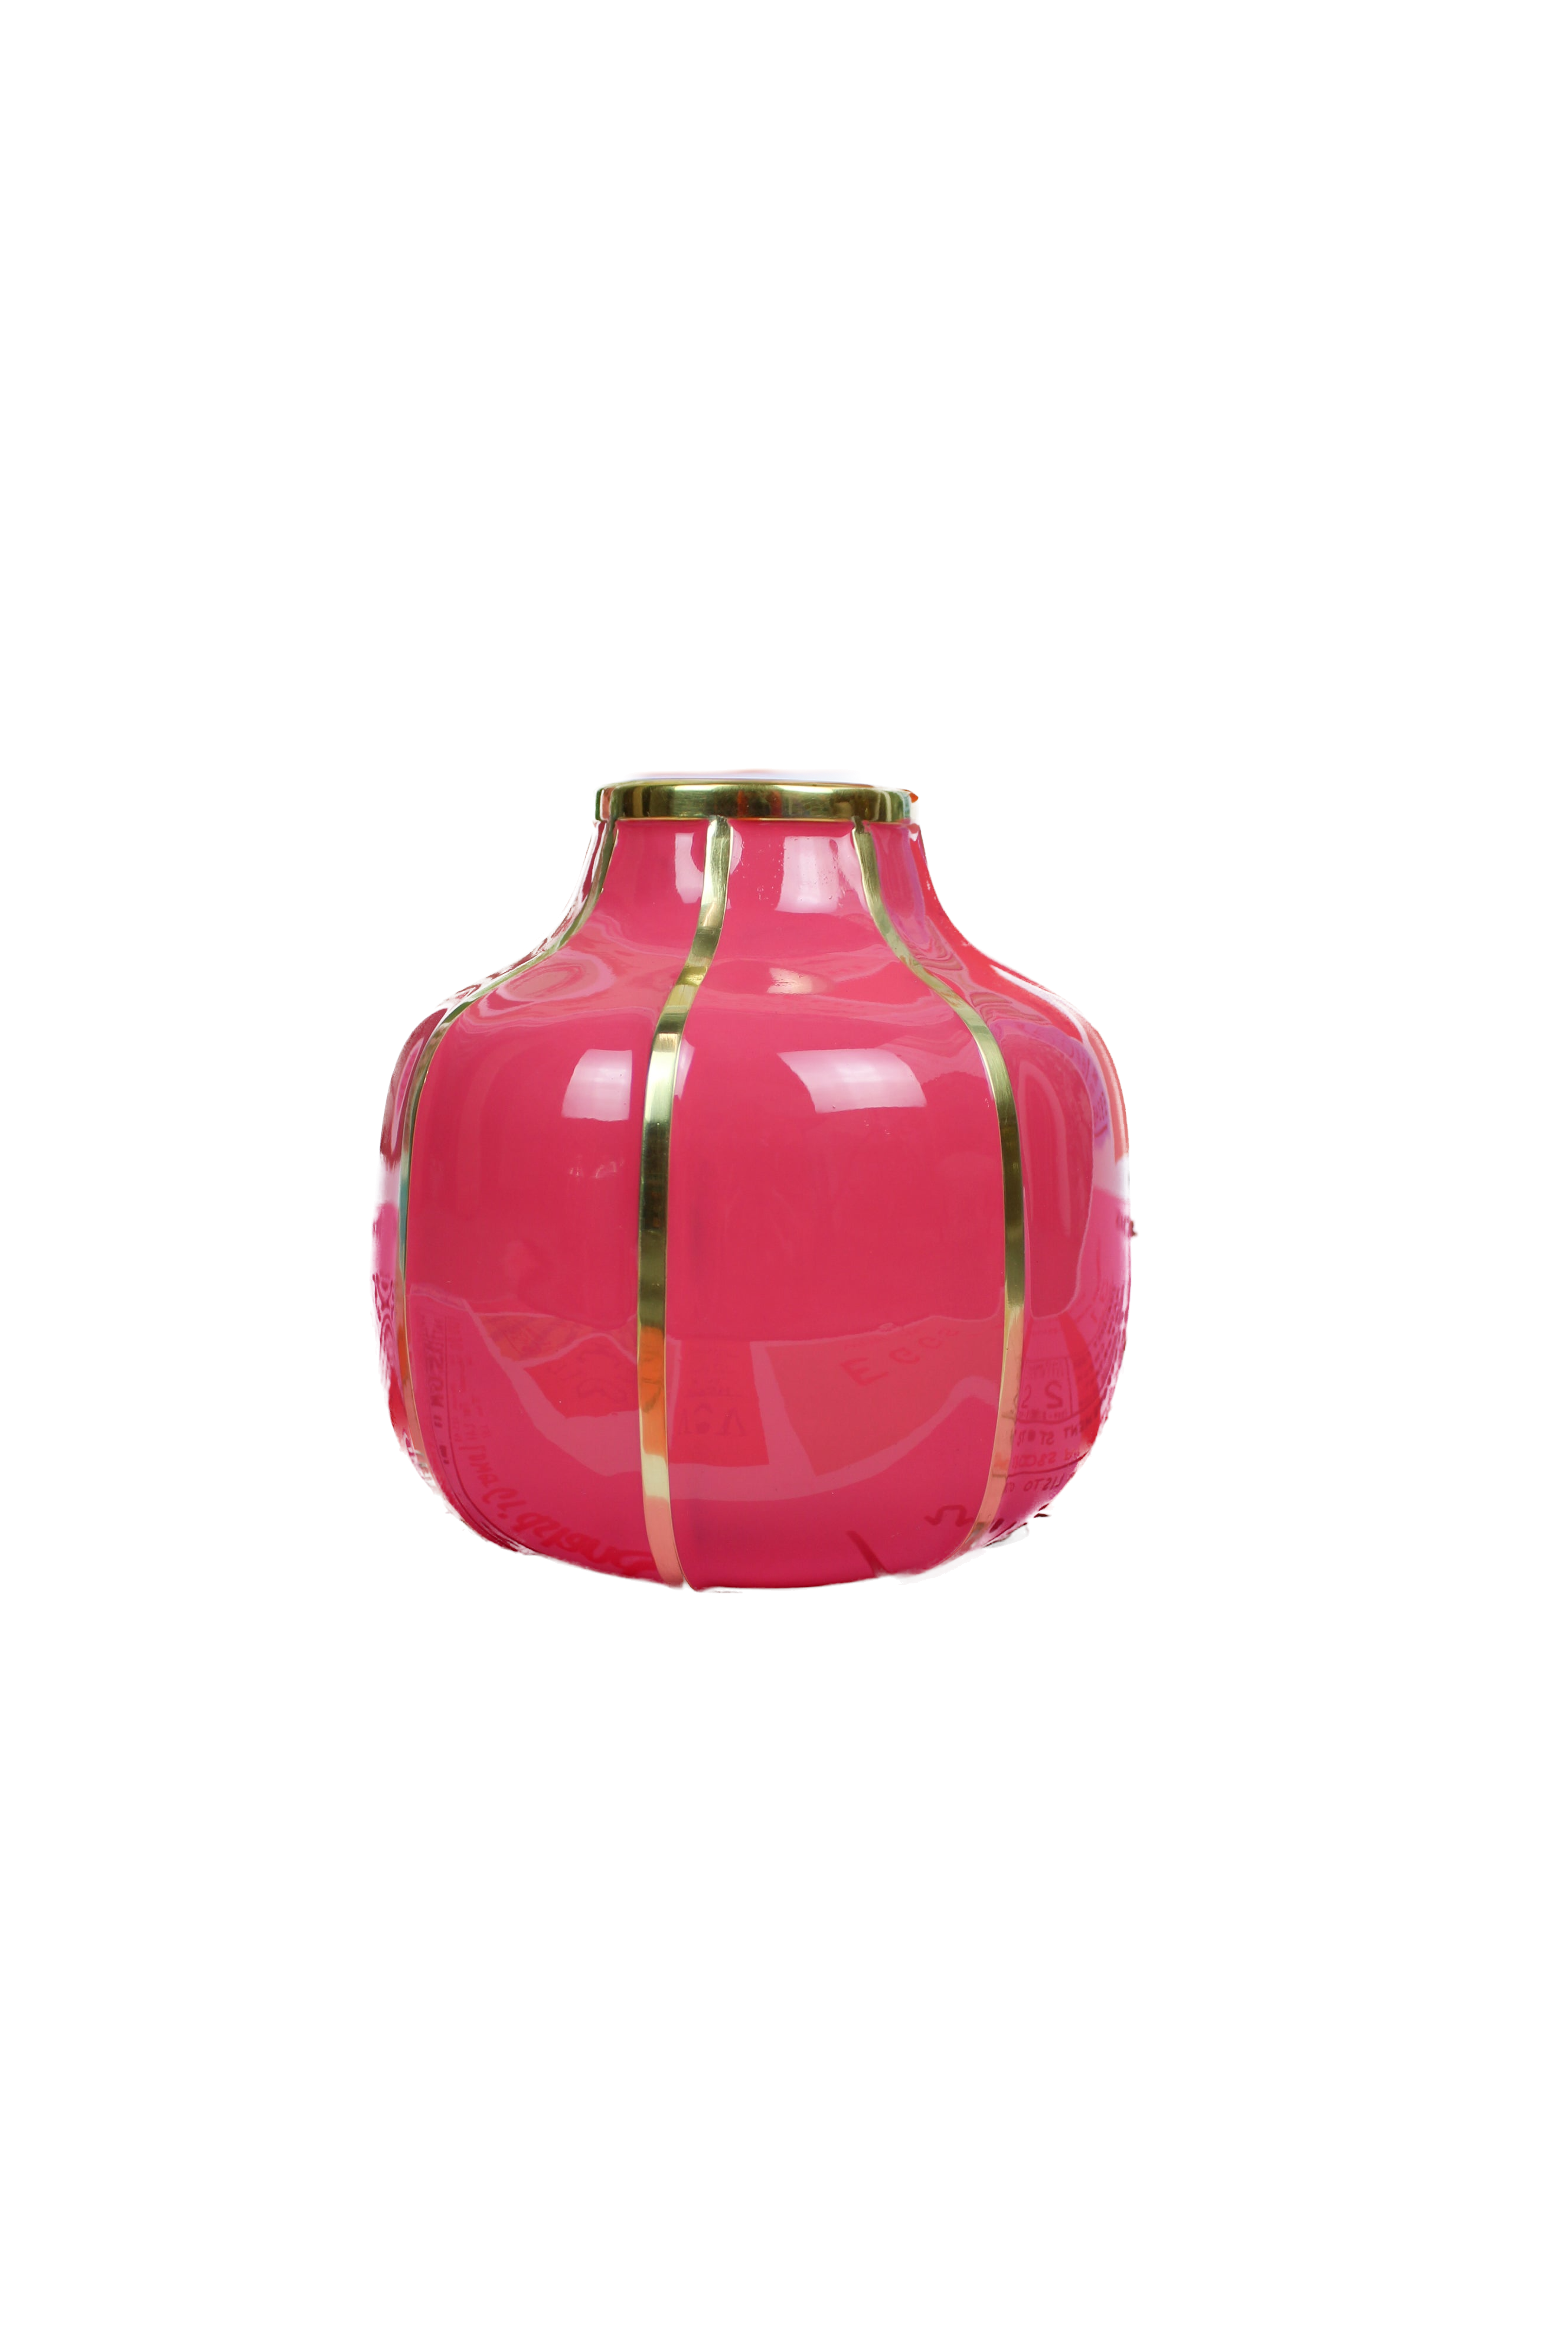 The Exotic Pink Enamel Vase